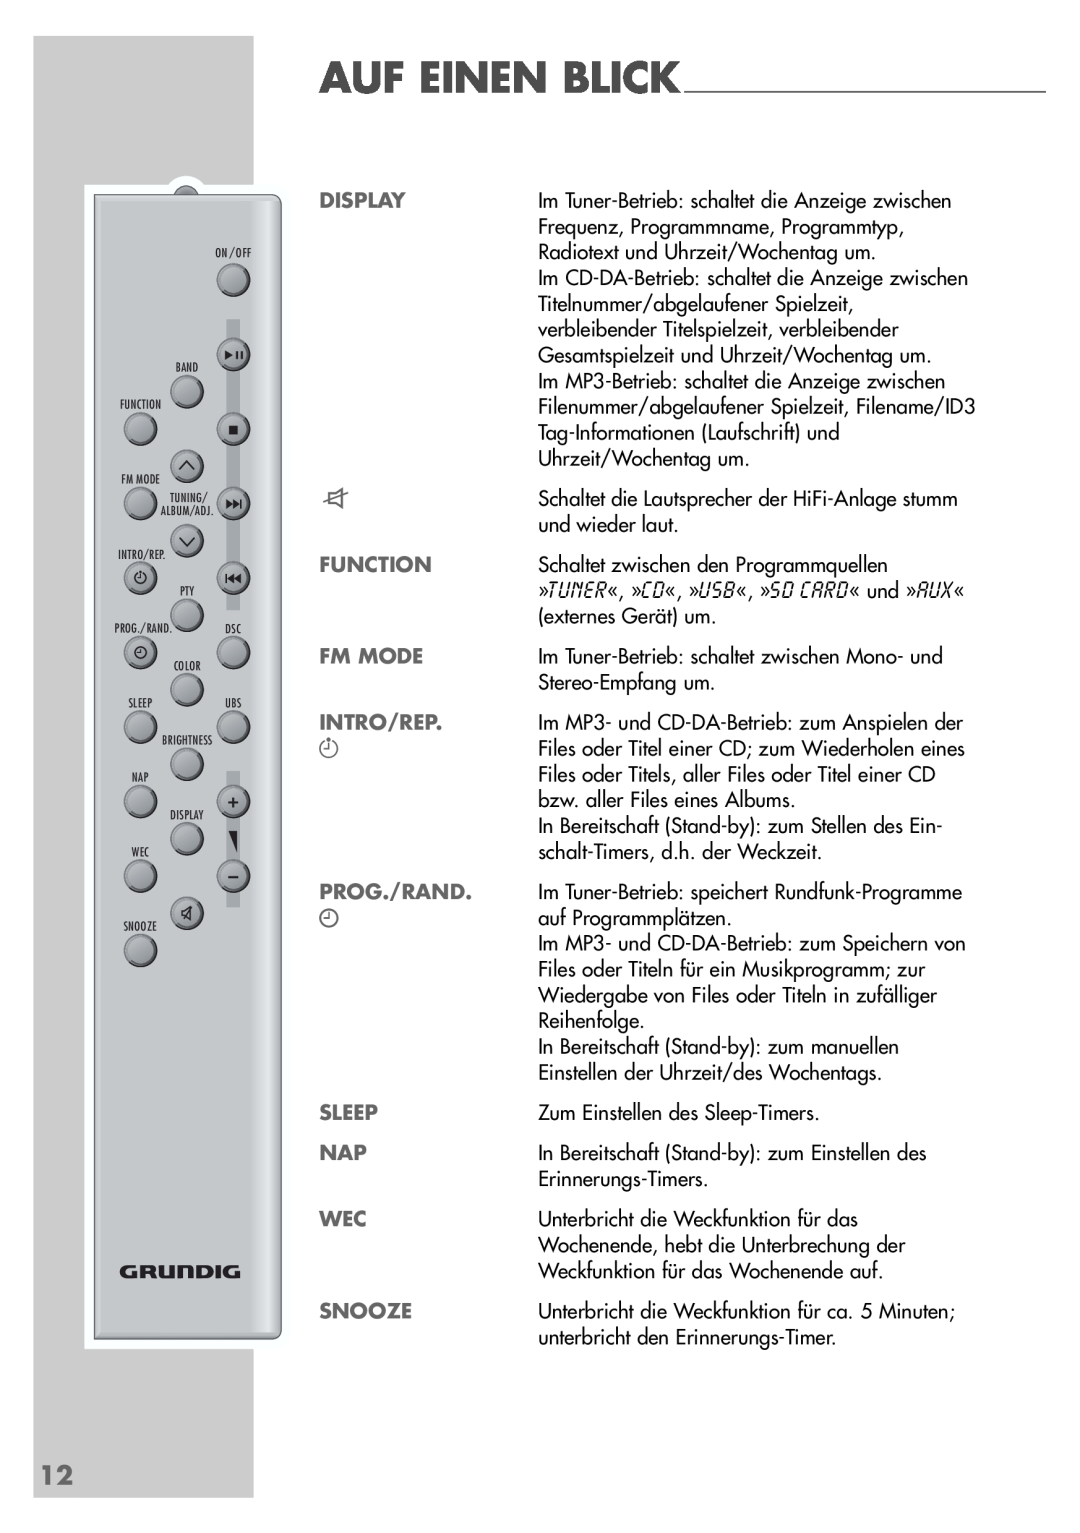 Grundig UMS 5400 DEC manual Display, Function, Fm Mode, Intro/Rep, Sleep, Snooze, Auf Einen Blick, Prog./Rand 